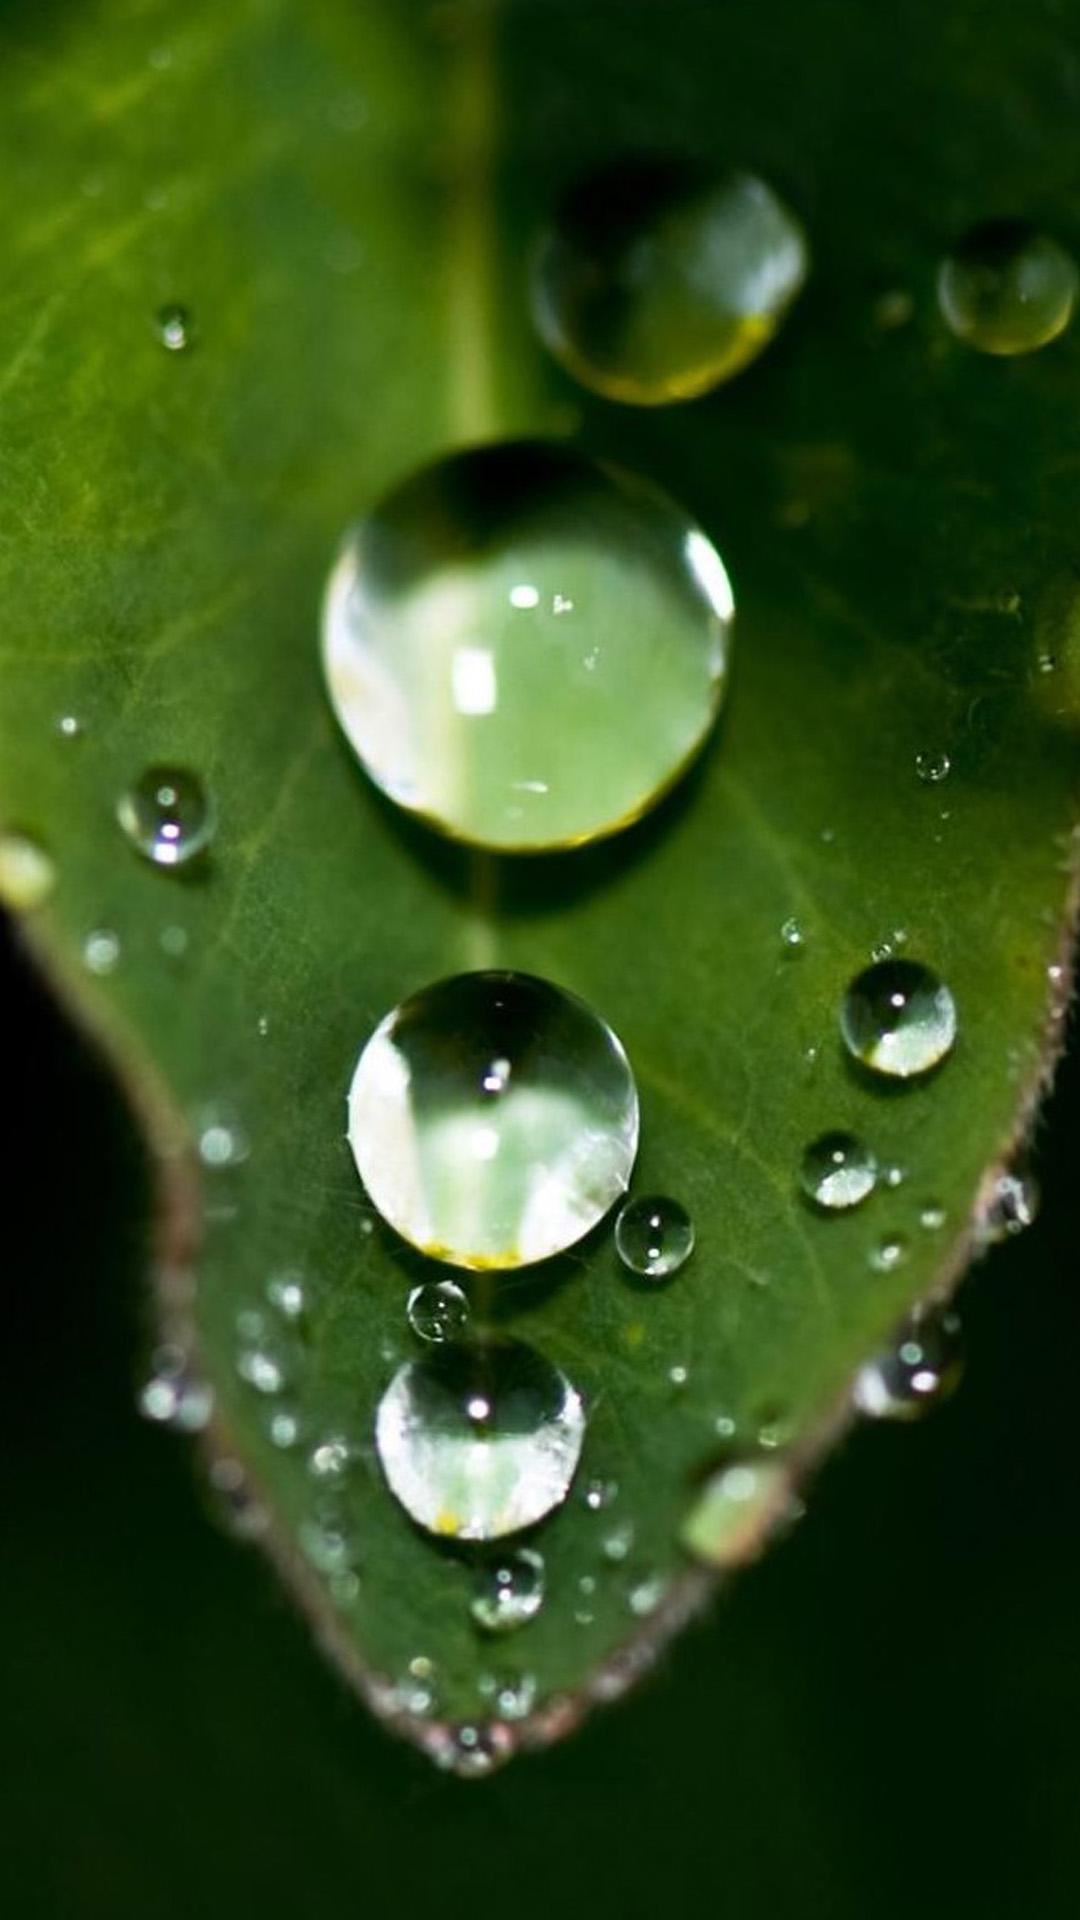 Falling Water Drop On Leaf iPhone 8 Wallpaper Free Download